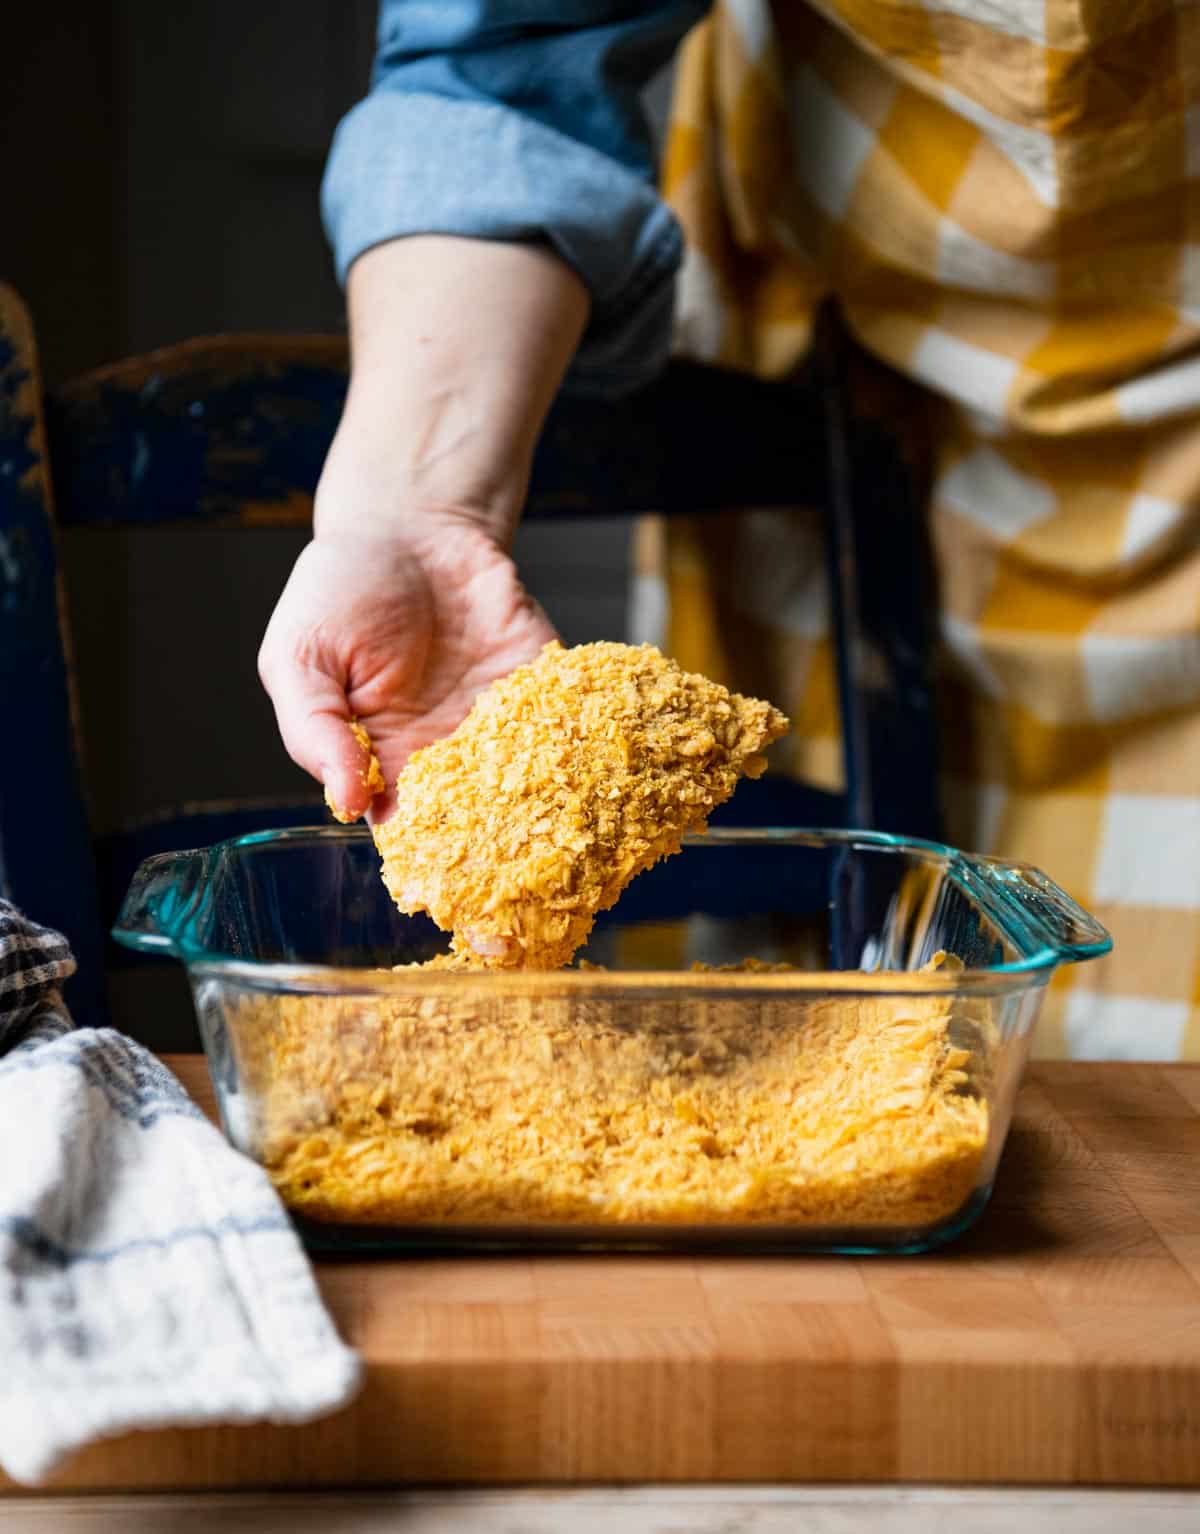 Process shot showing how to make cornflake chicken.